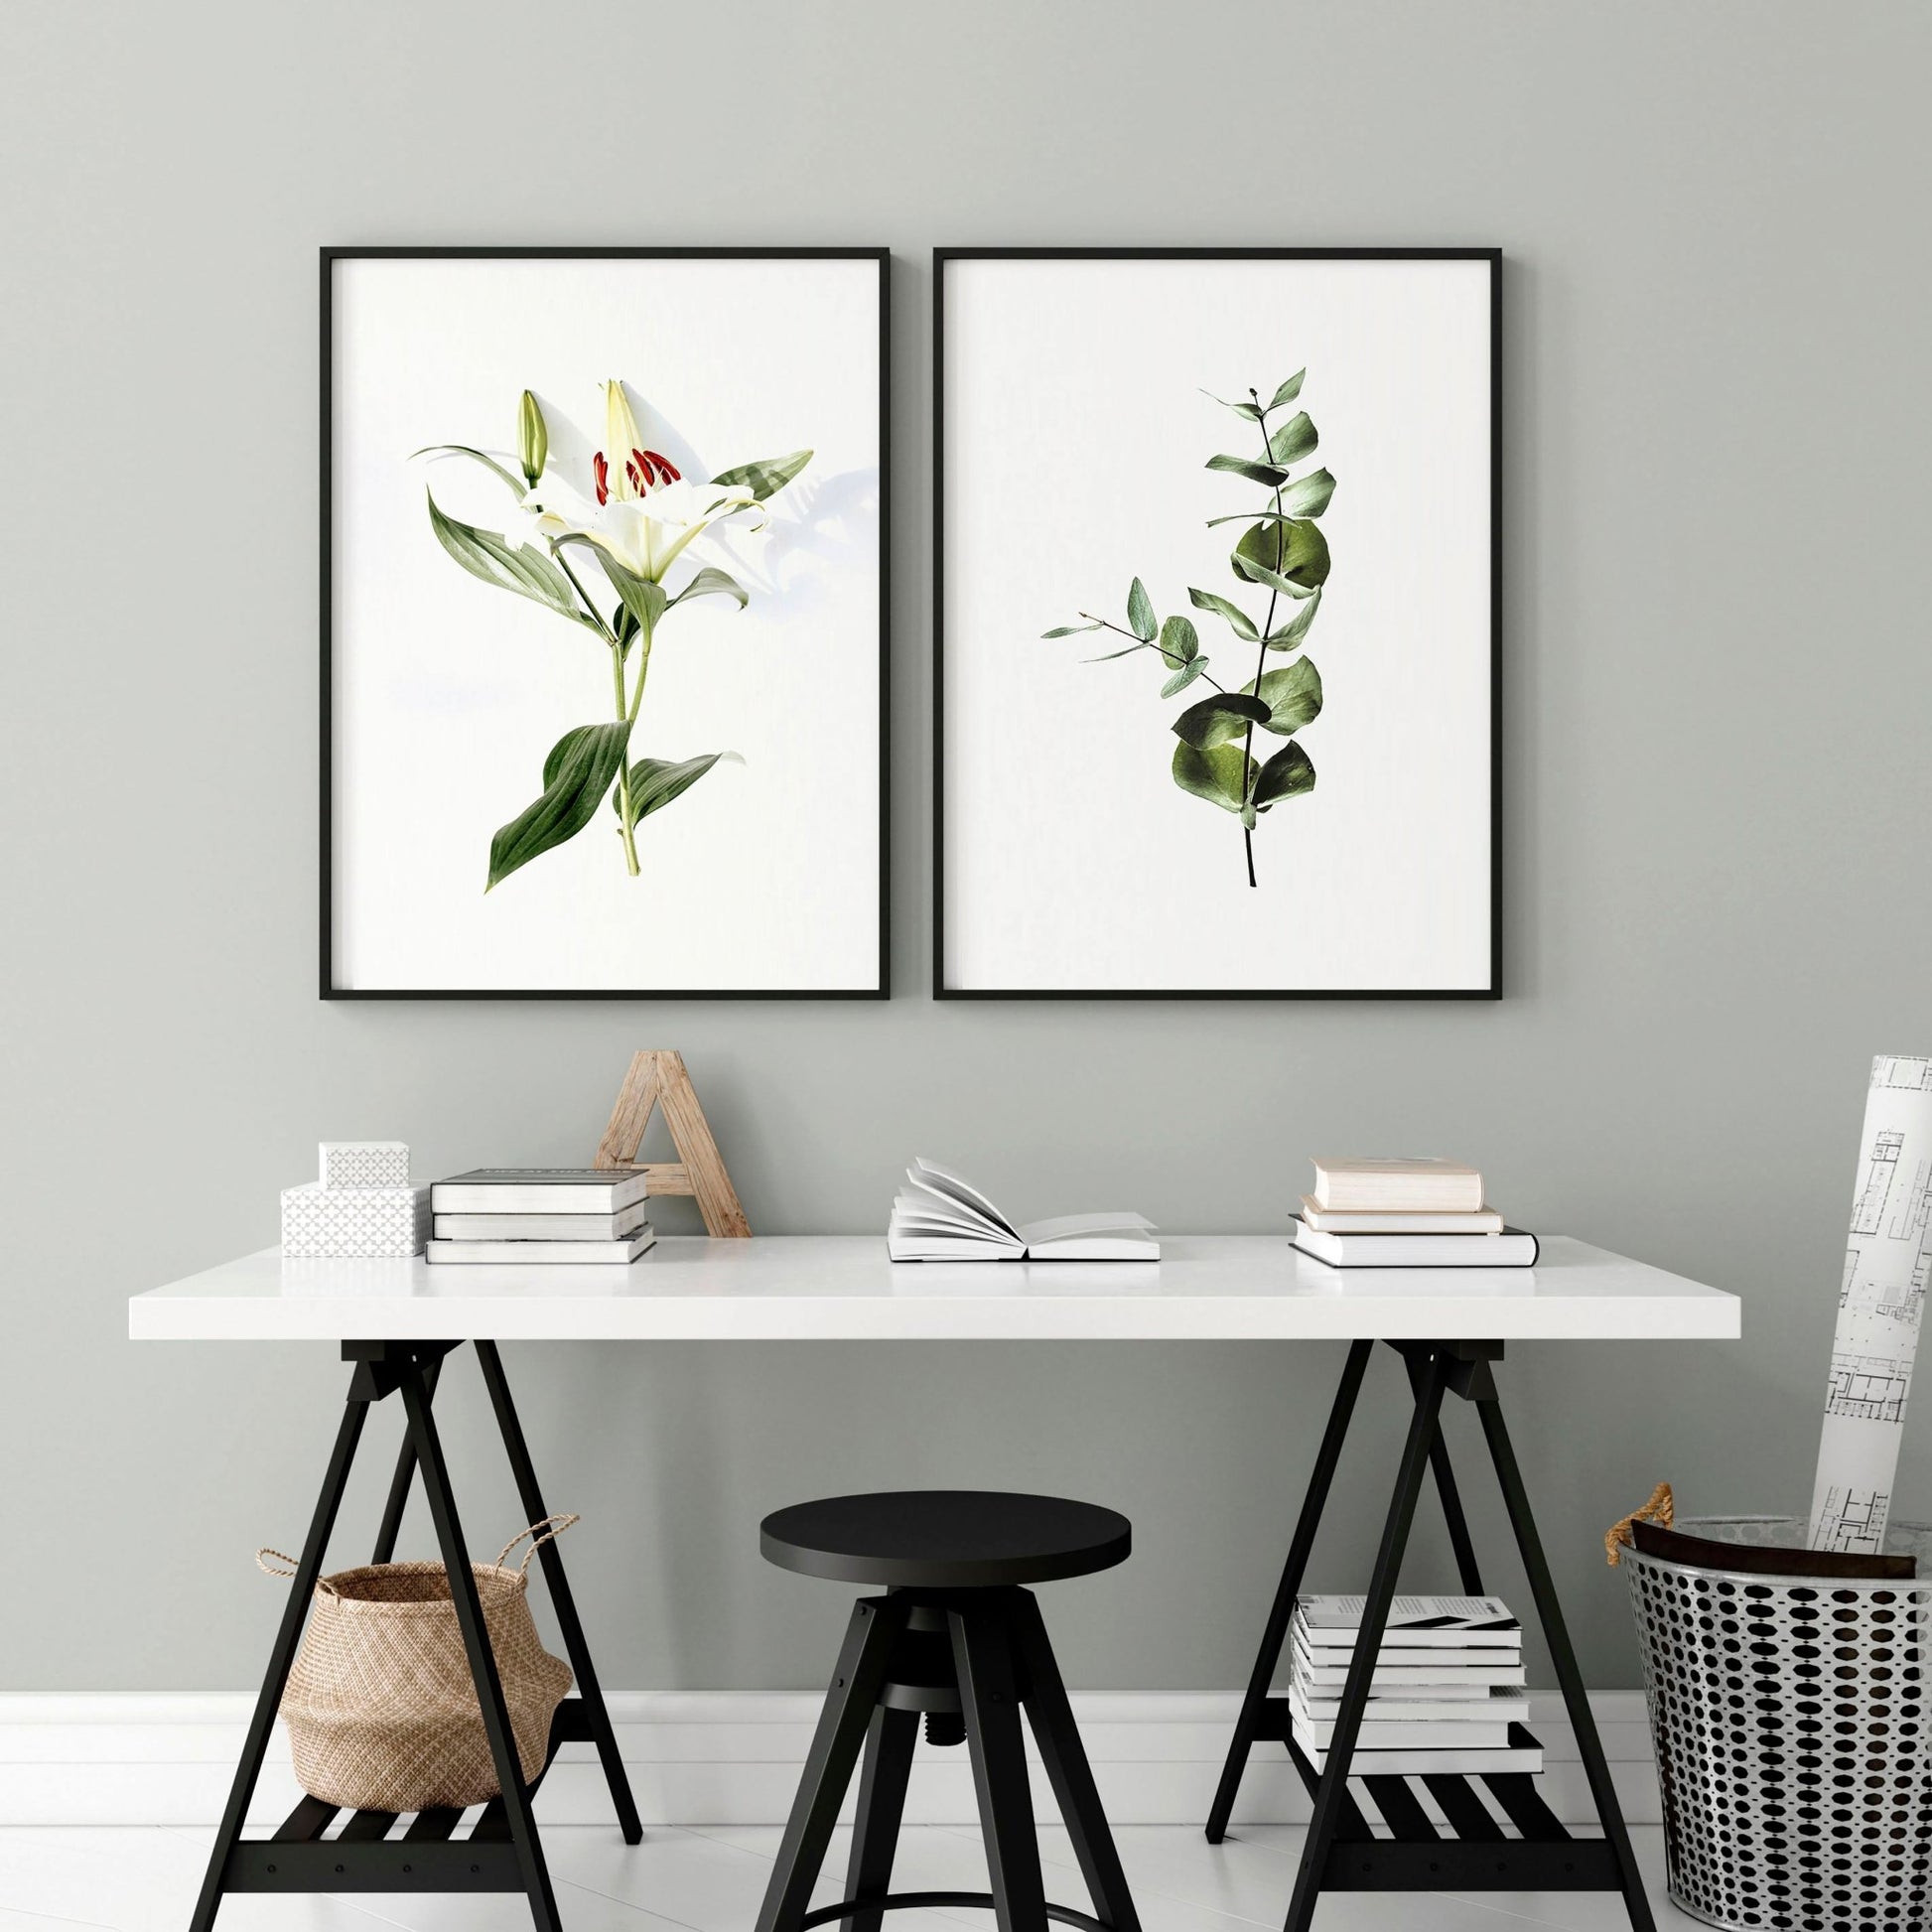 Professional office decor ideas | set of 2 wall art prints - About Wall Art